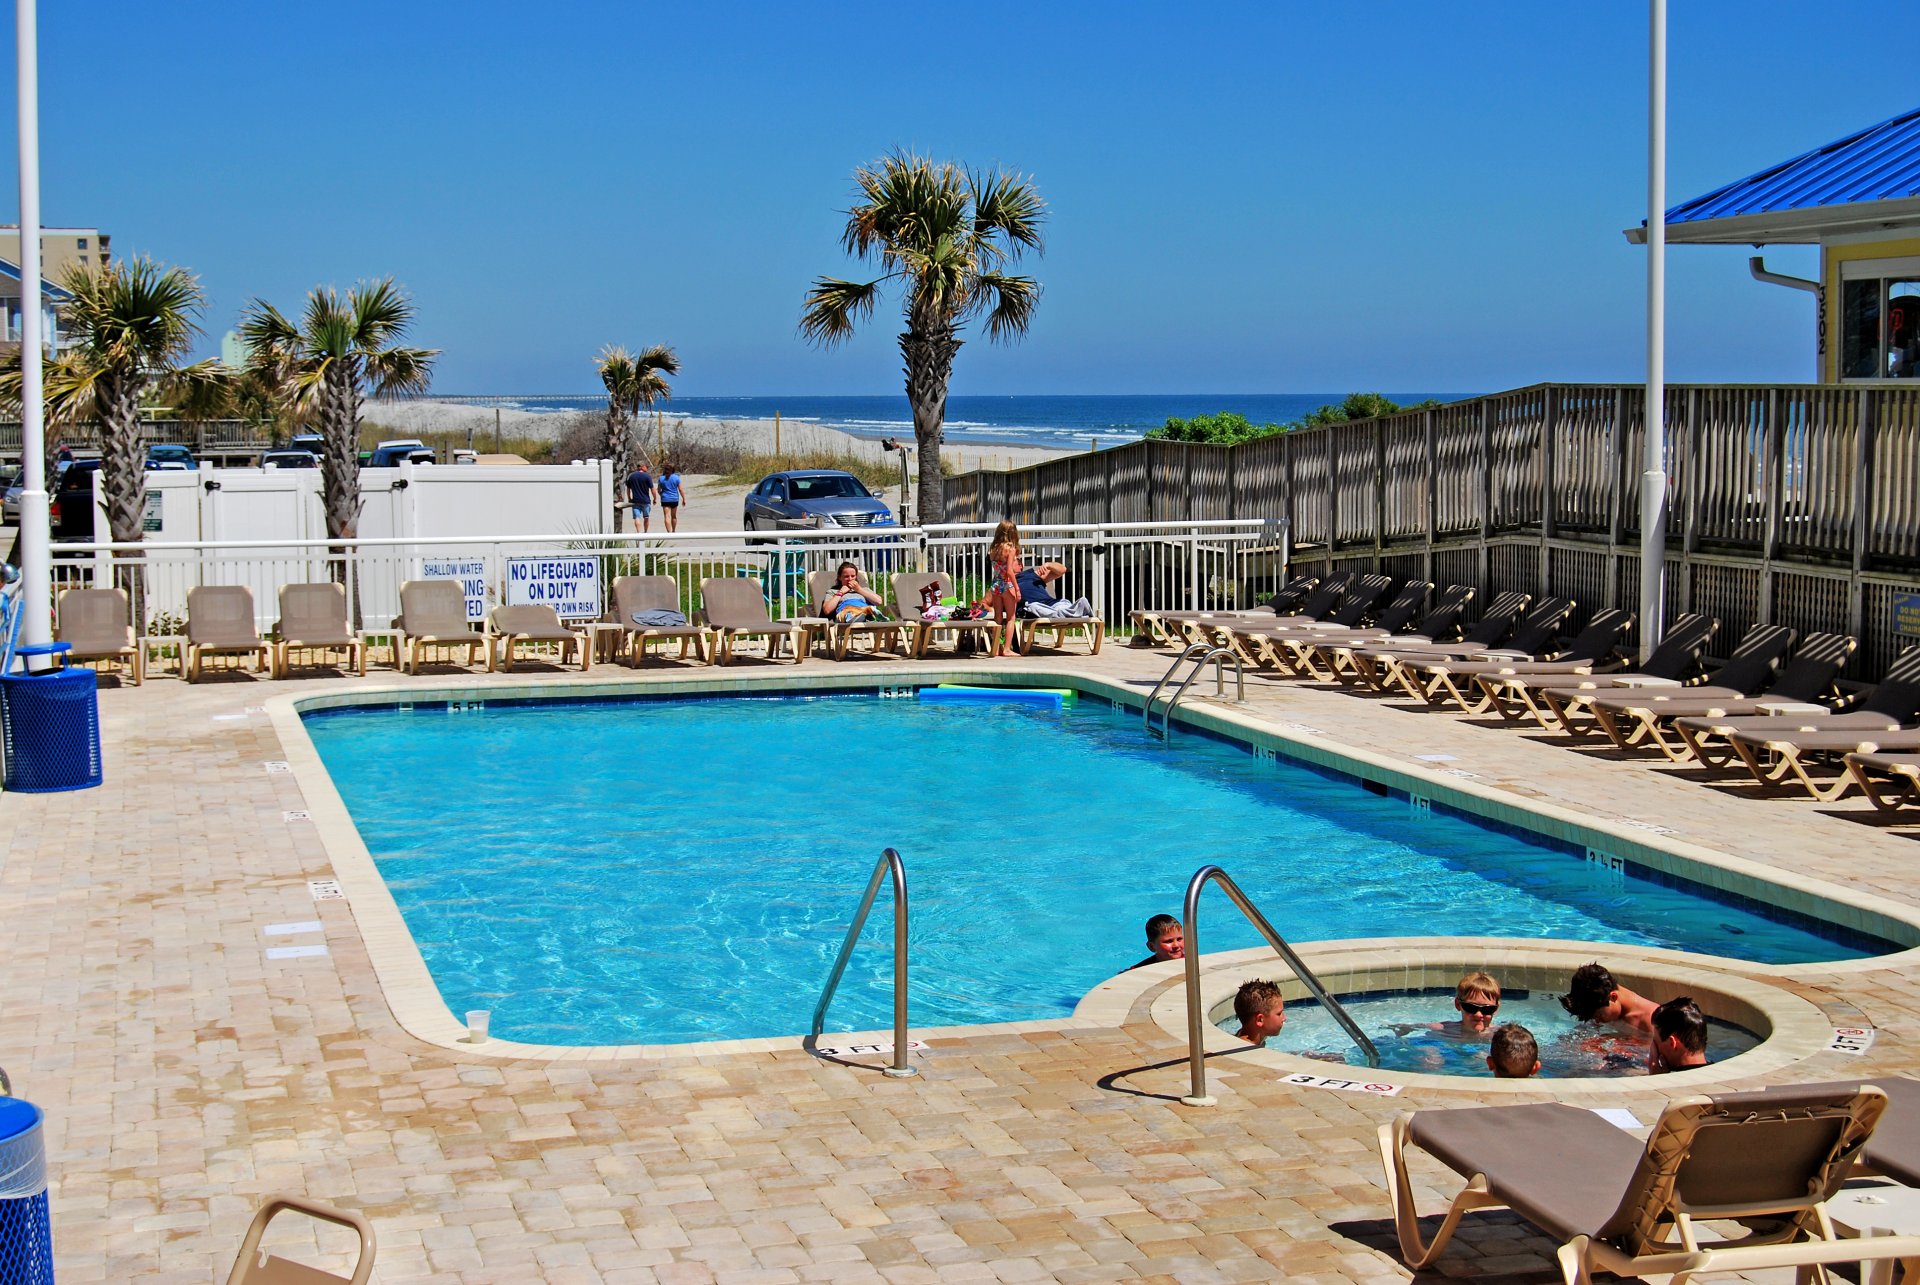 Prince Resort North Myrtle Beach Oceanfront Condo Rentals